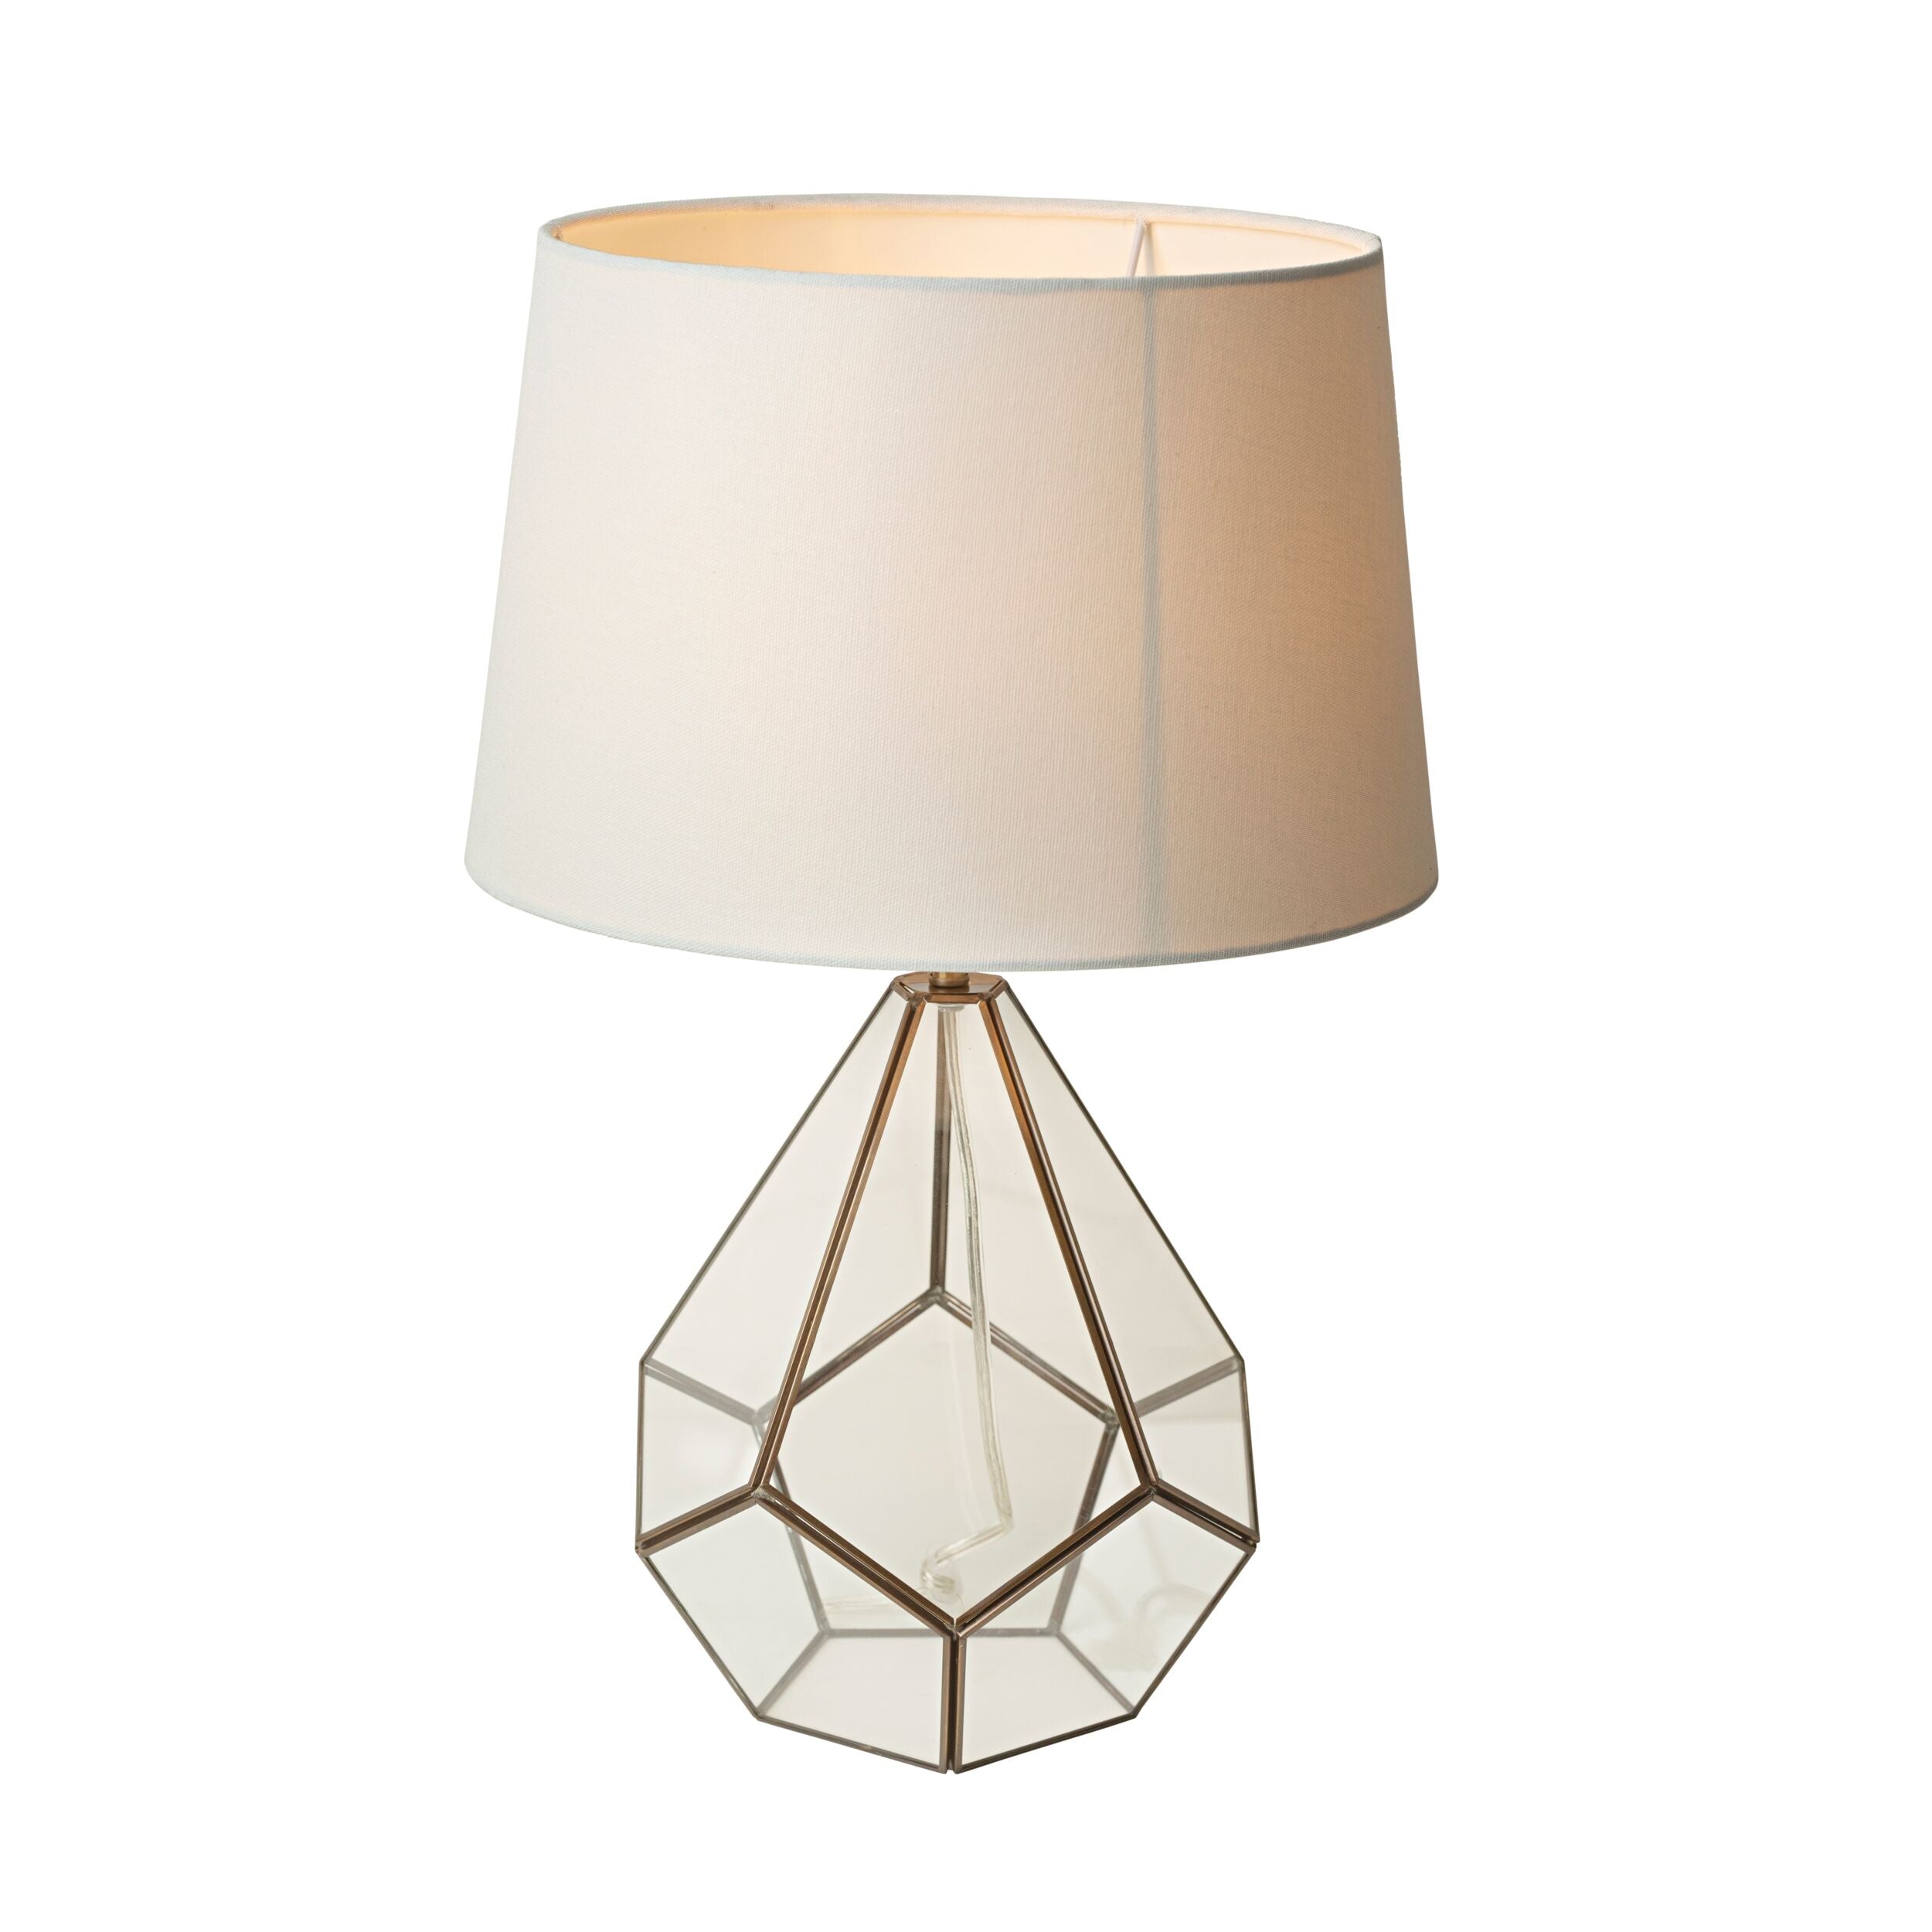 Hexagonal Table Lamp 54cm